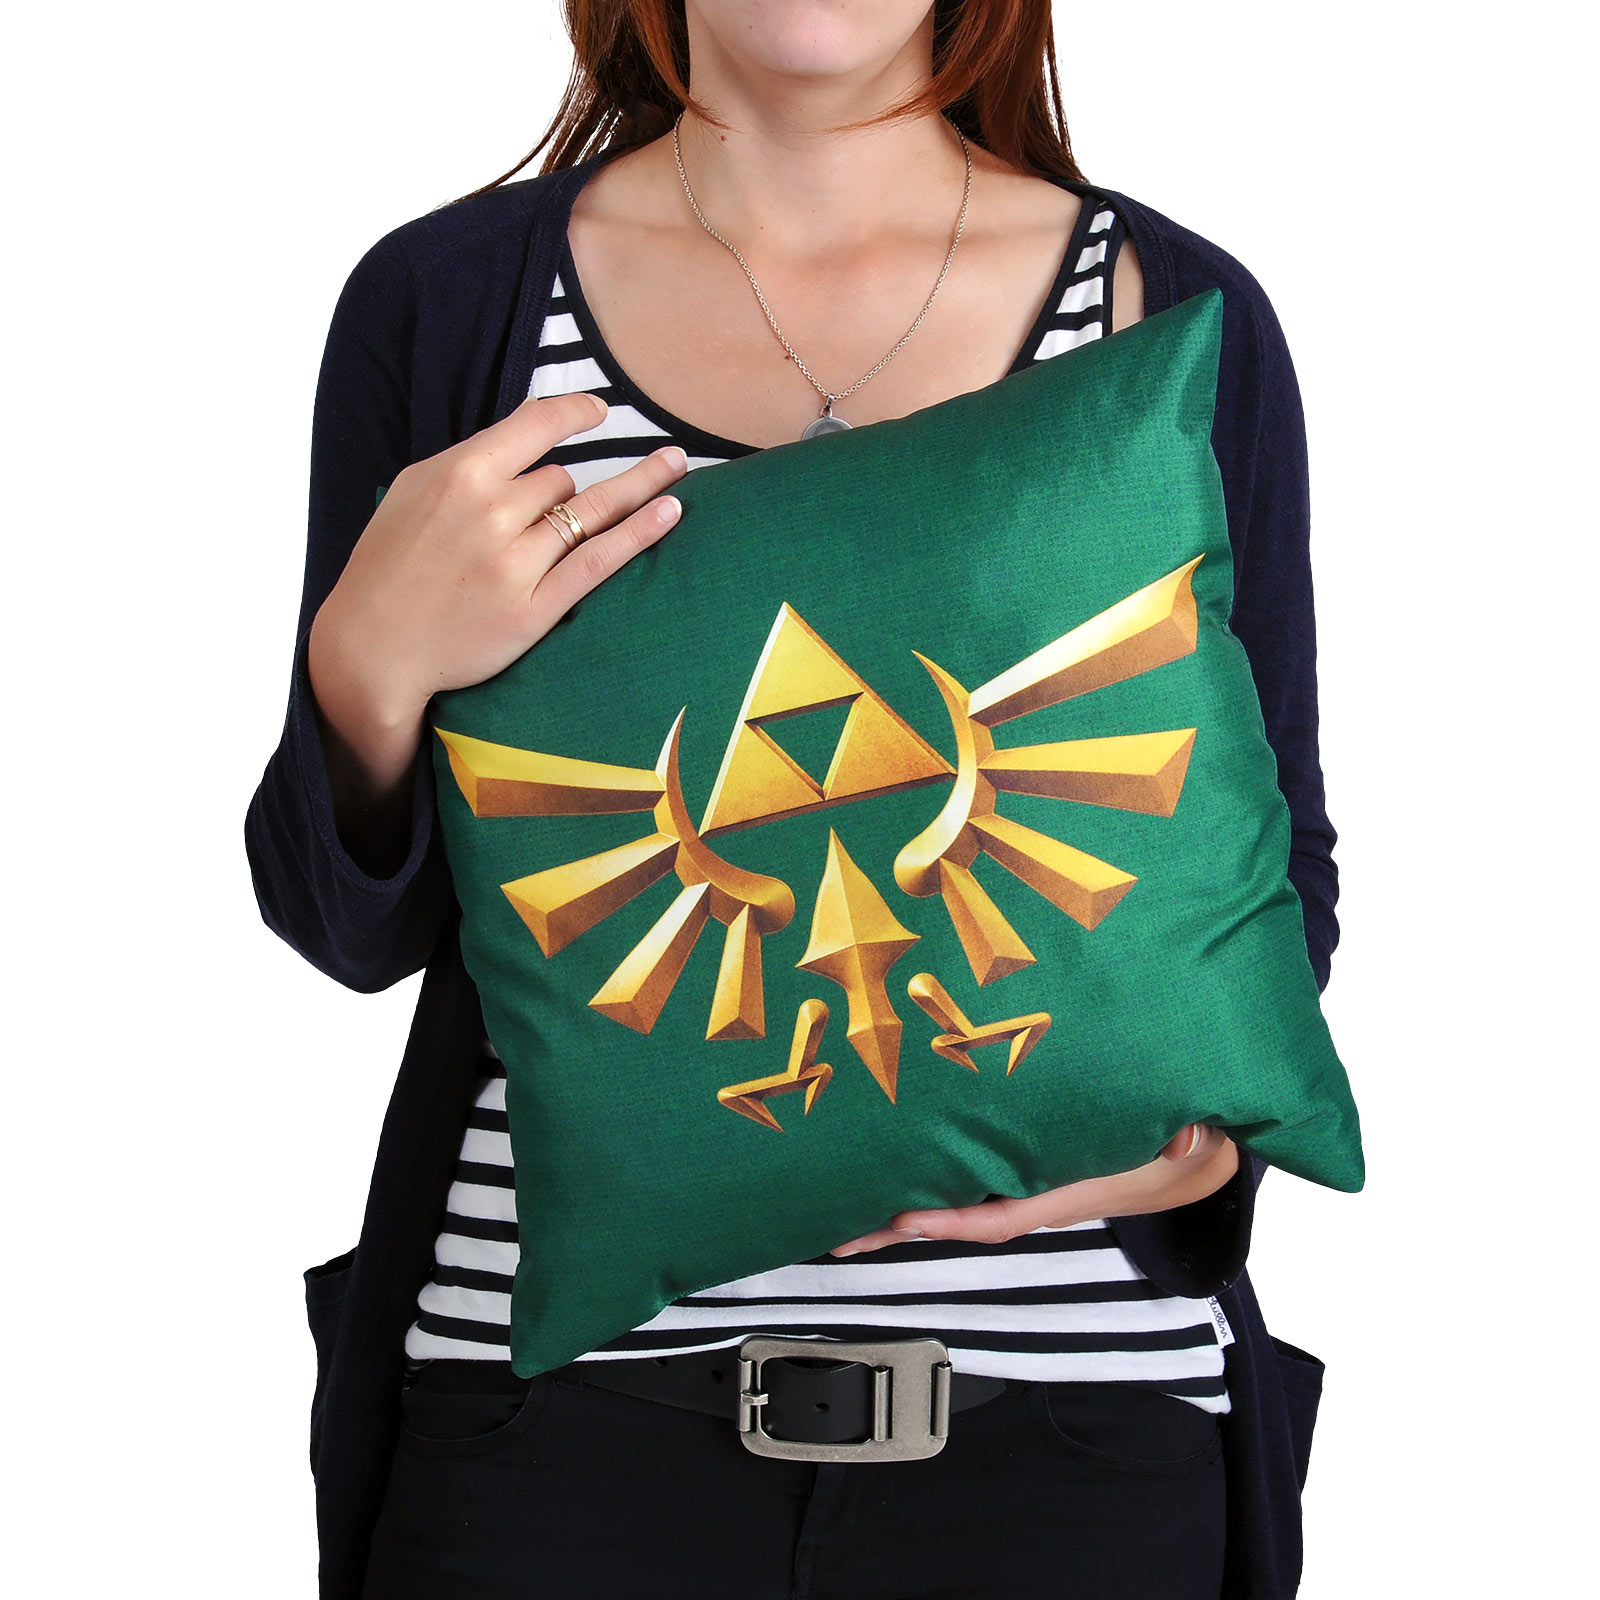 Zelda - Coussin Logo Hyrule Triforce